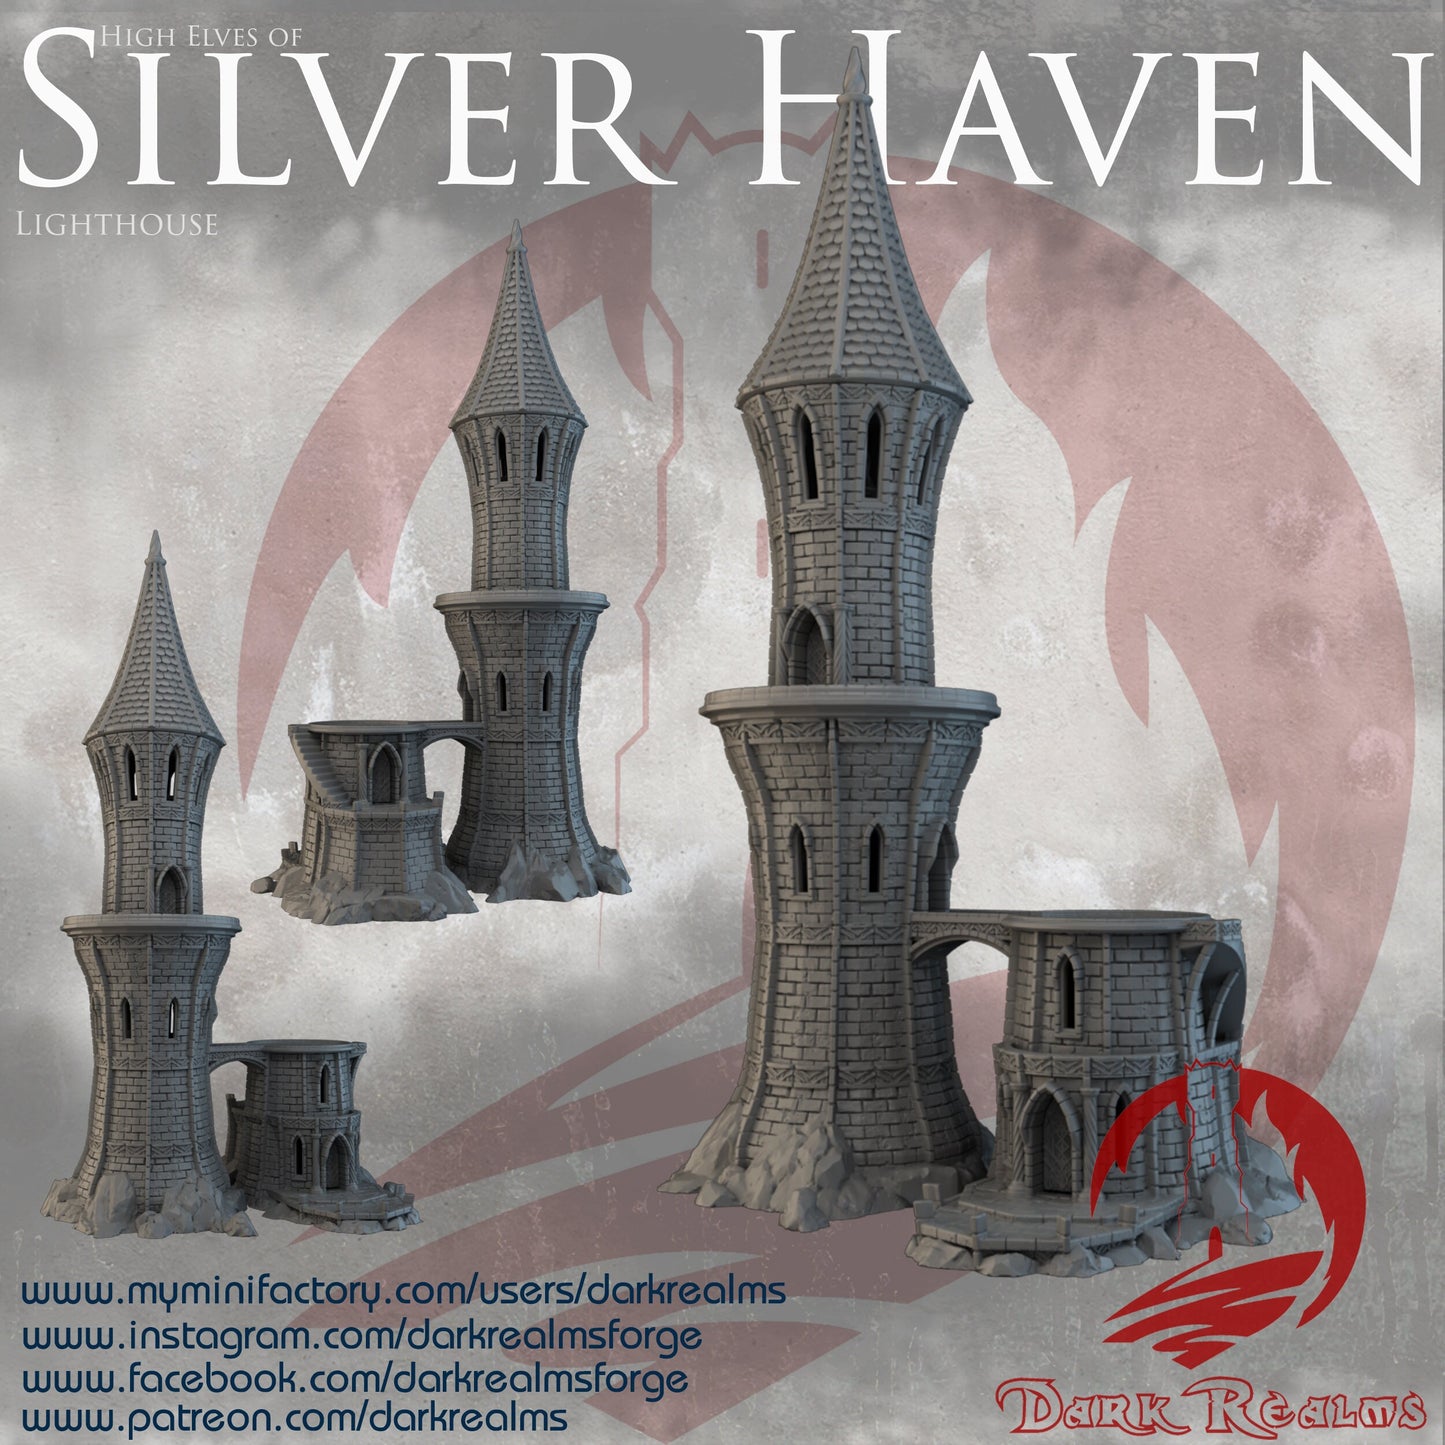 Elven Lighthouse, Silver Haven, High elves Lighthouse, High Elves watch tower